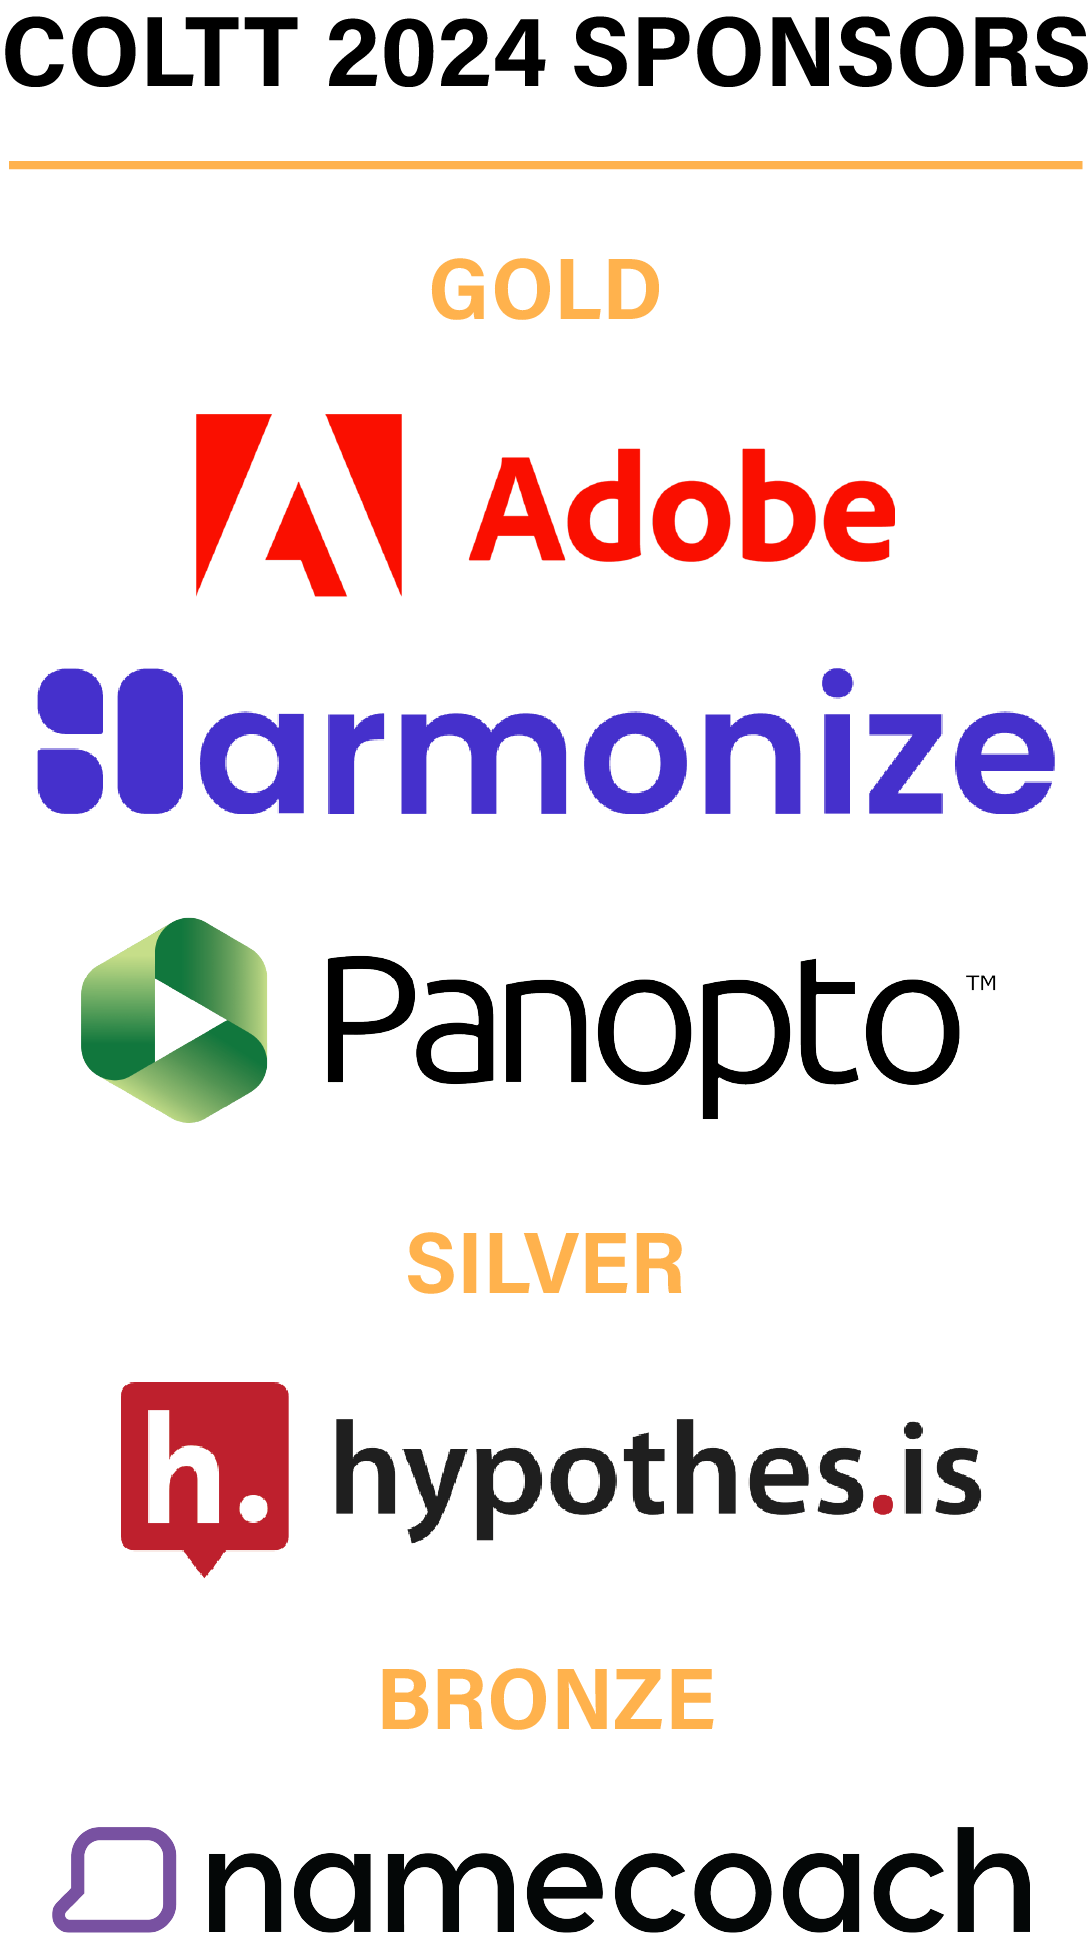 COLTT 2024 Sponsors, Adobe, Harmonize, Panopto, Hypothesis, Namecoach